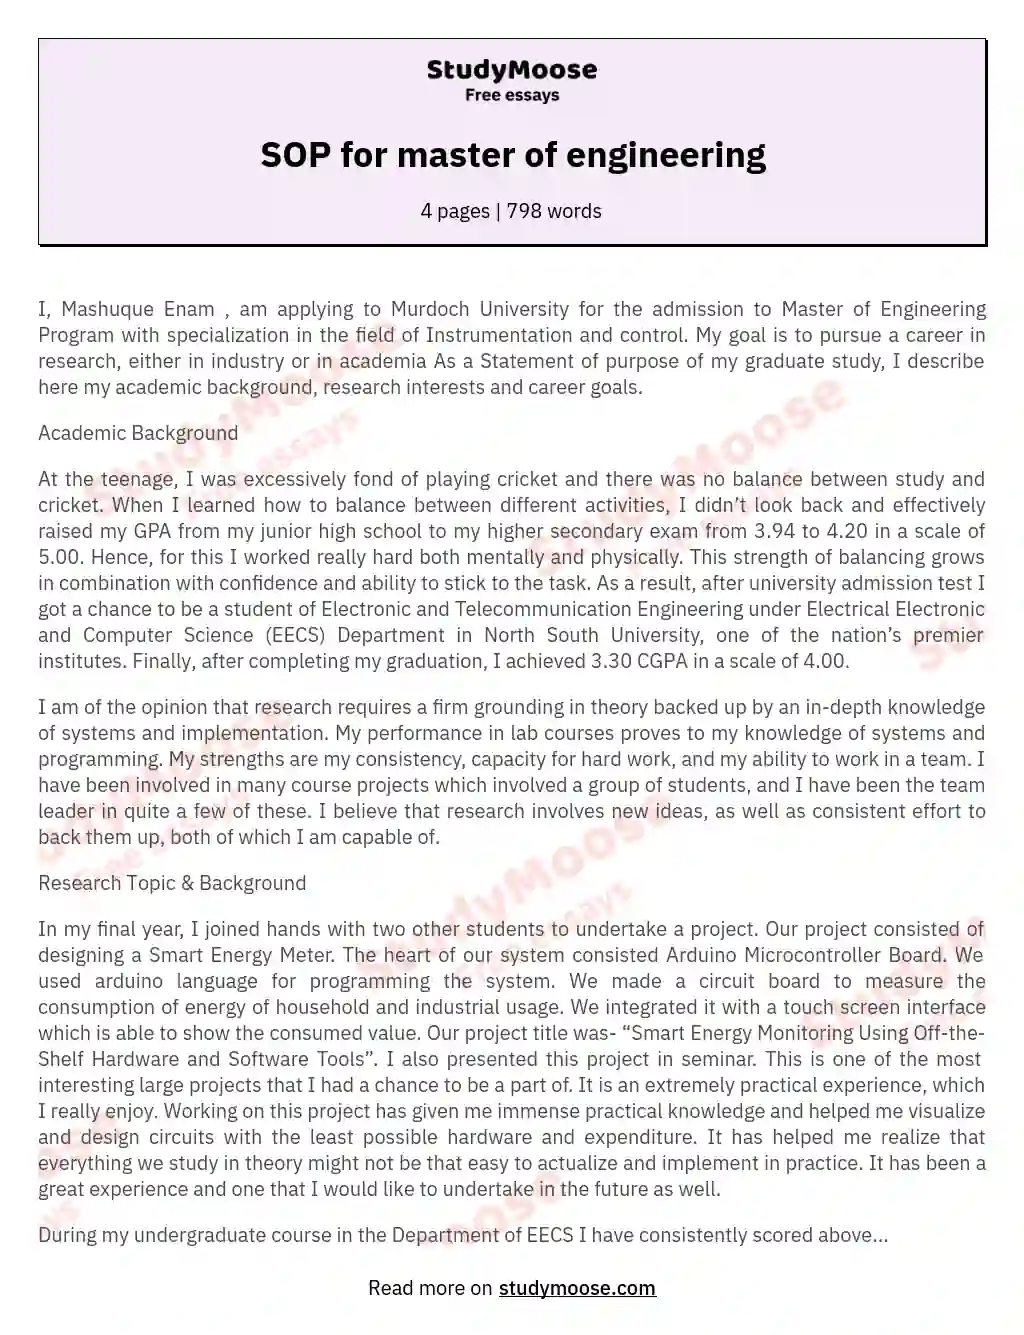 SOP for master of engineering essay